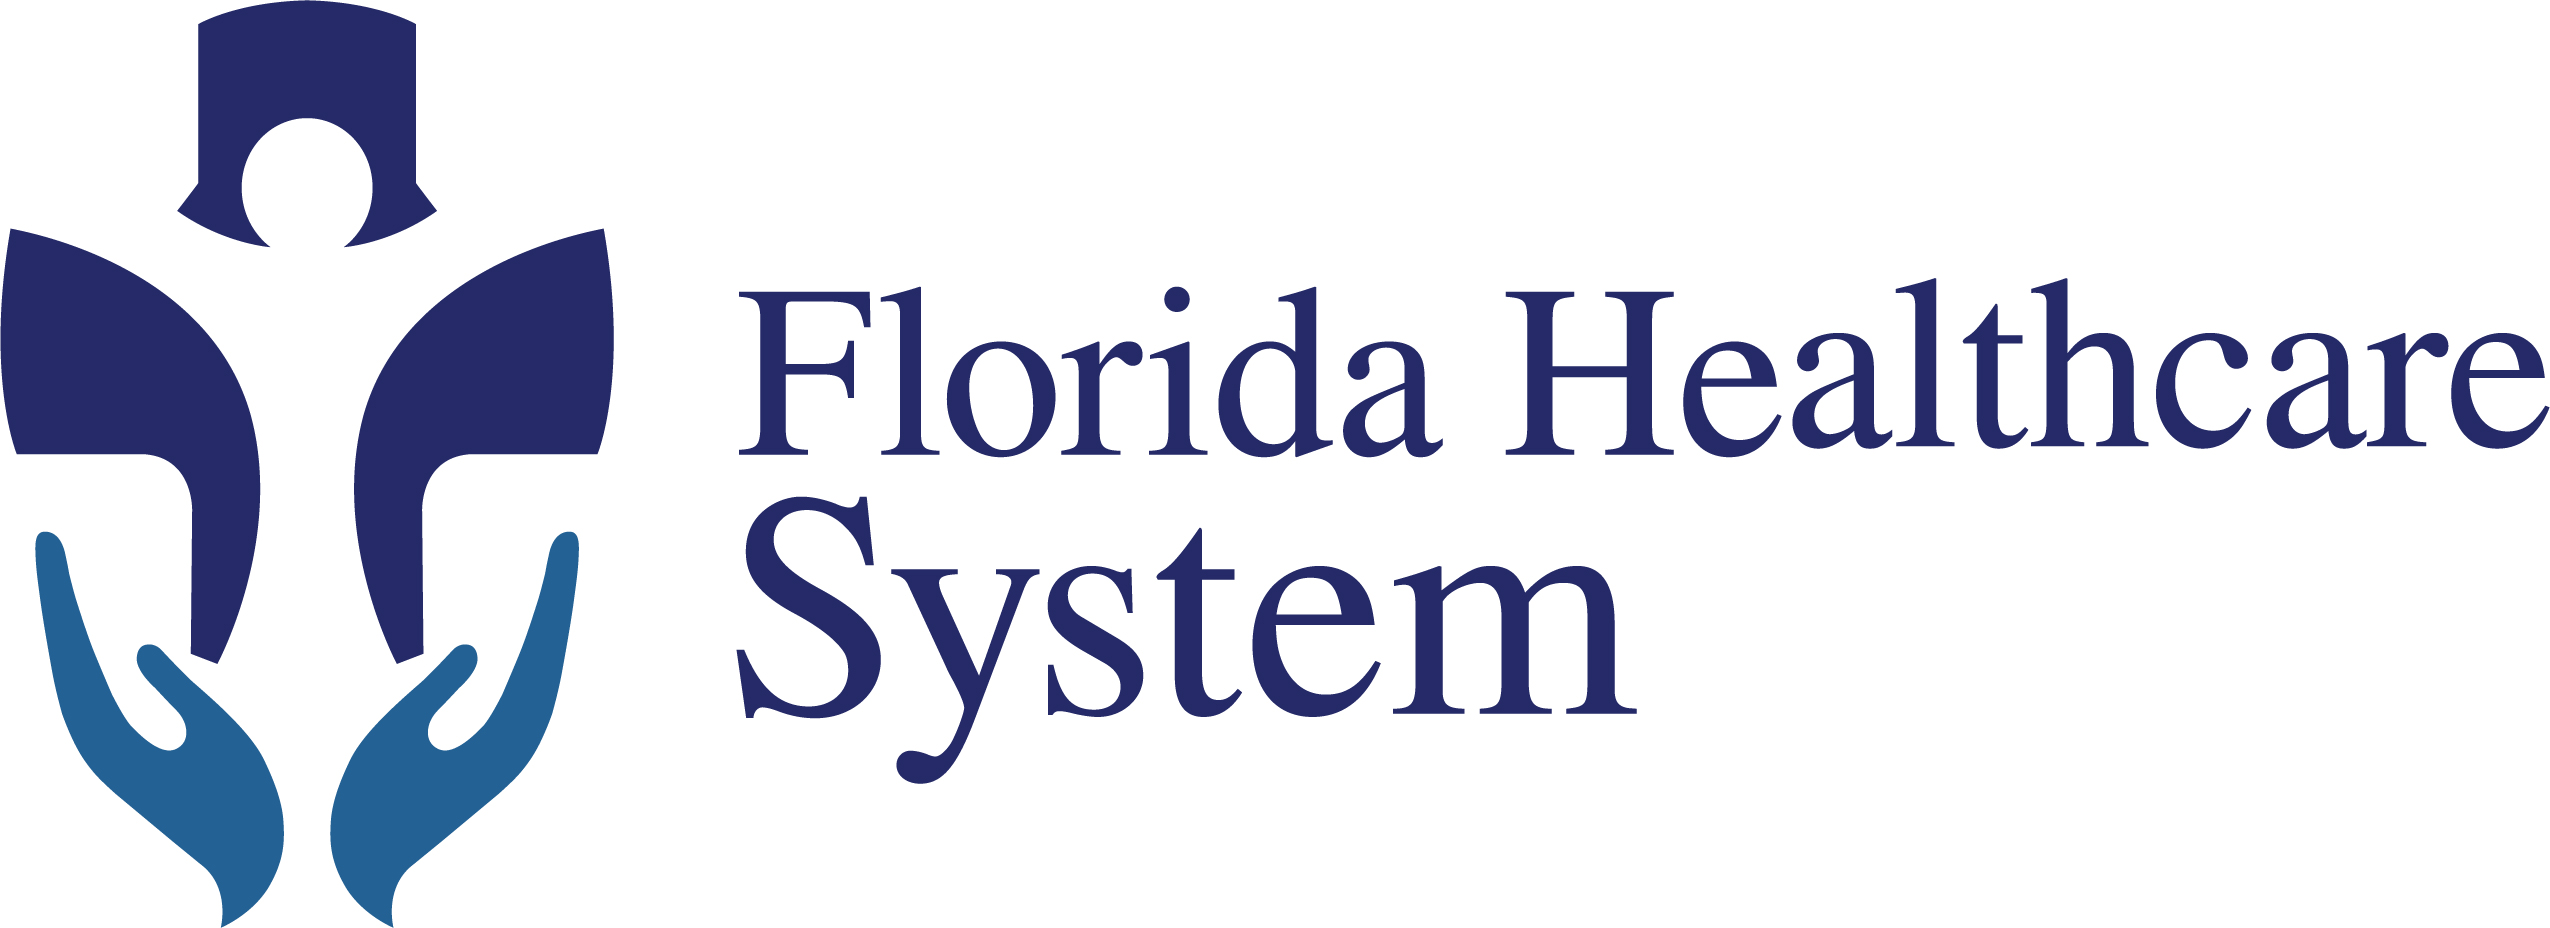 Florida Healthcare System